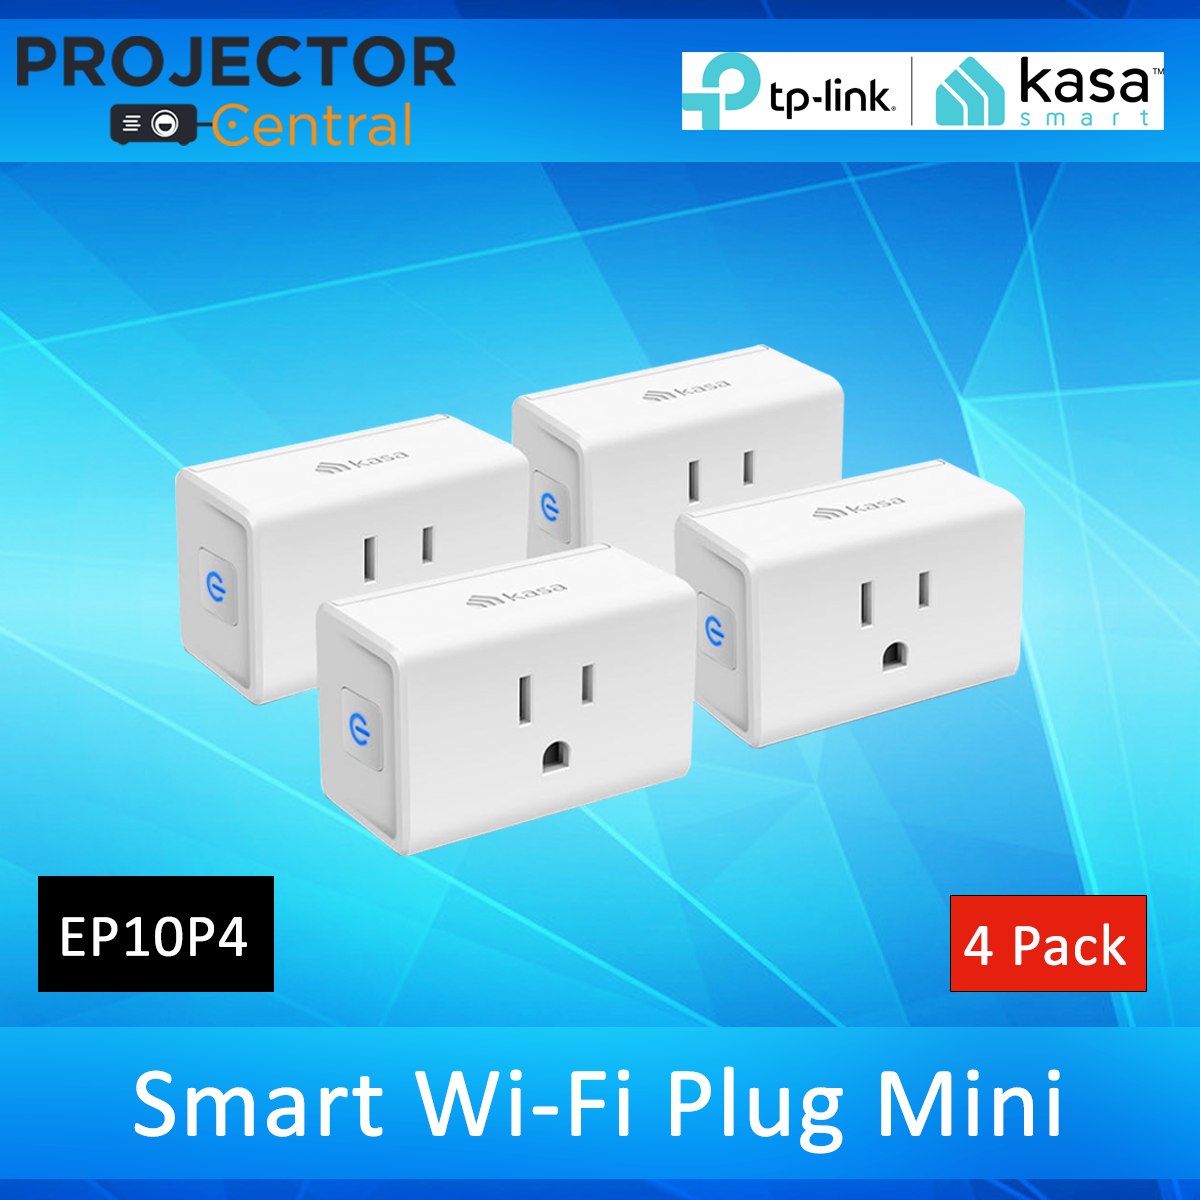 TP-Link Kasa Smart EP10P4, Kasa Smart Plug Mini 15A, 4-Pack